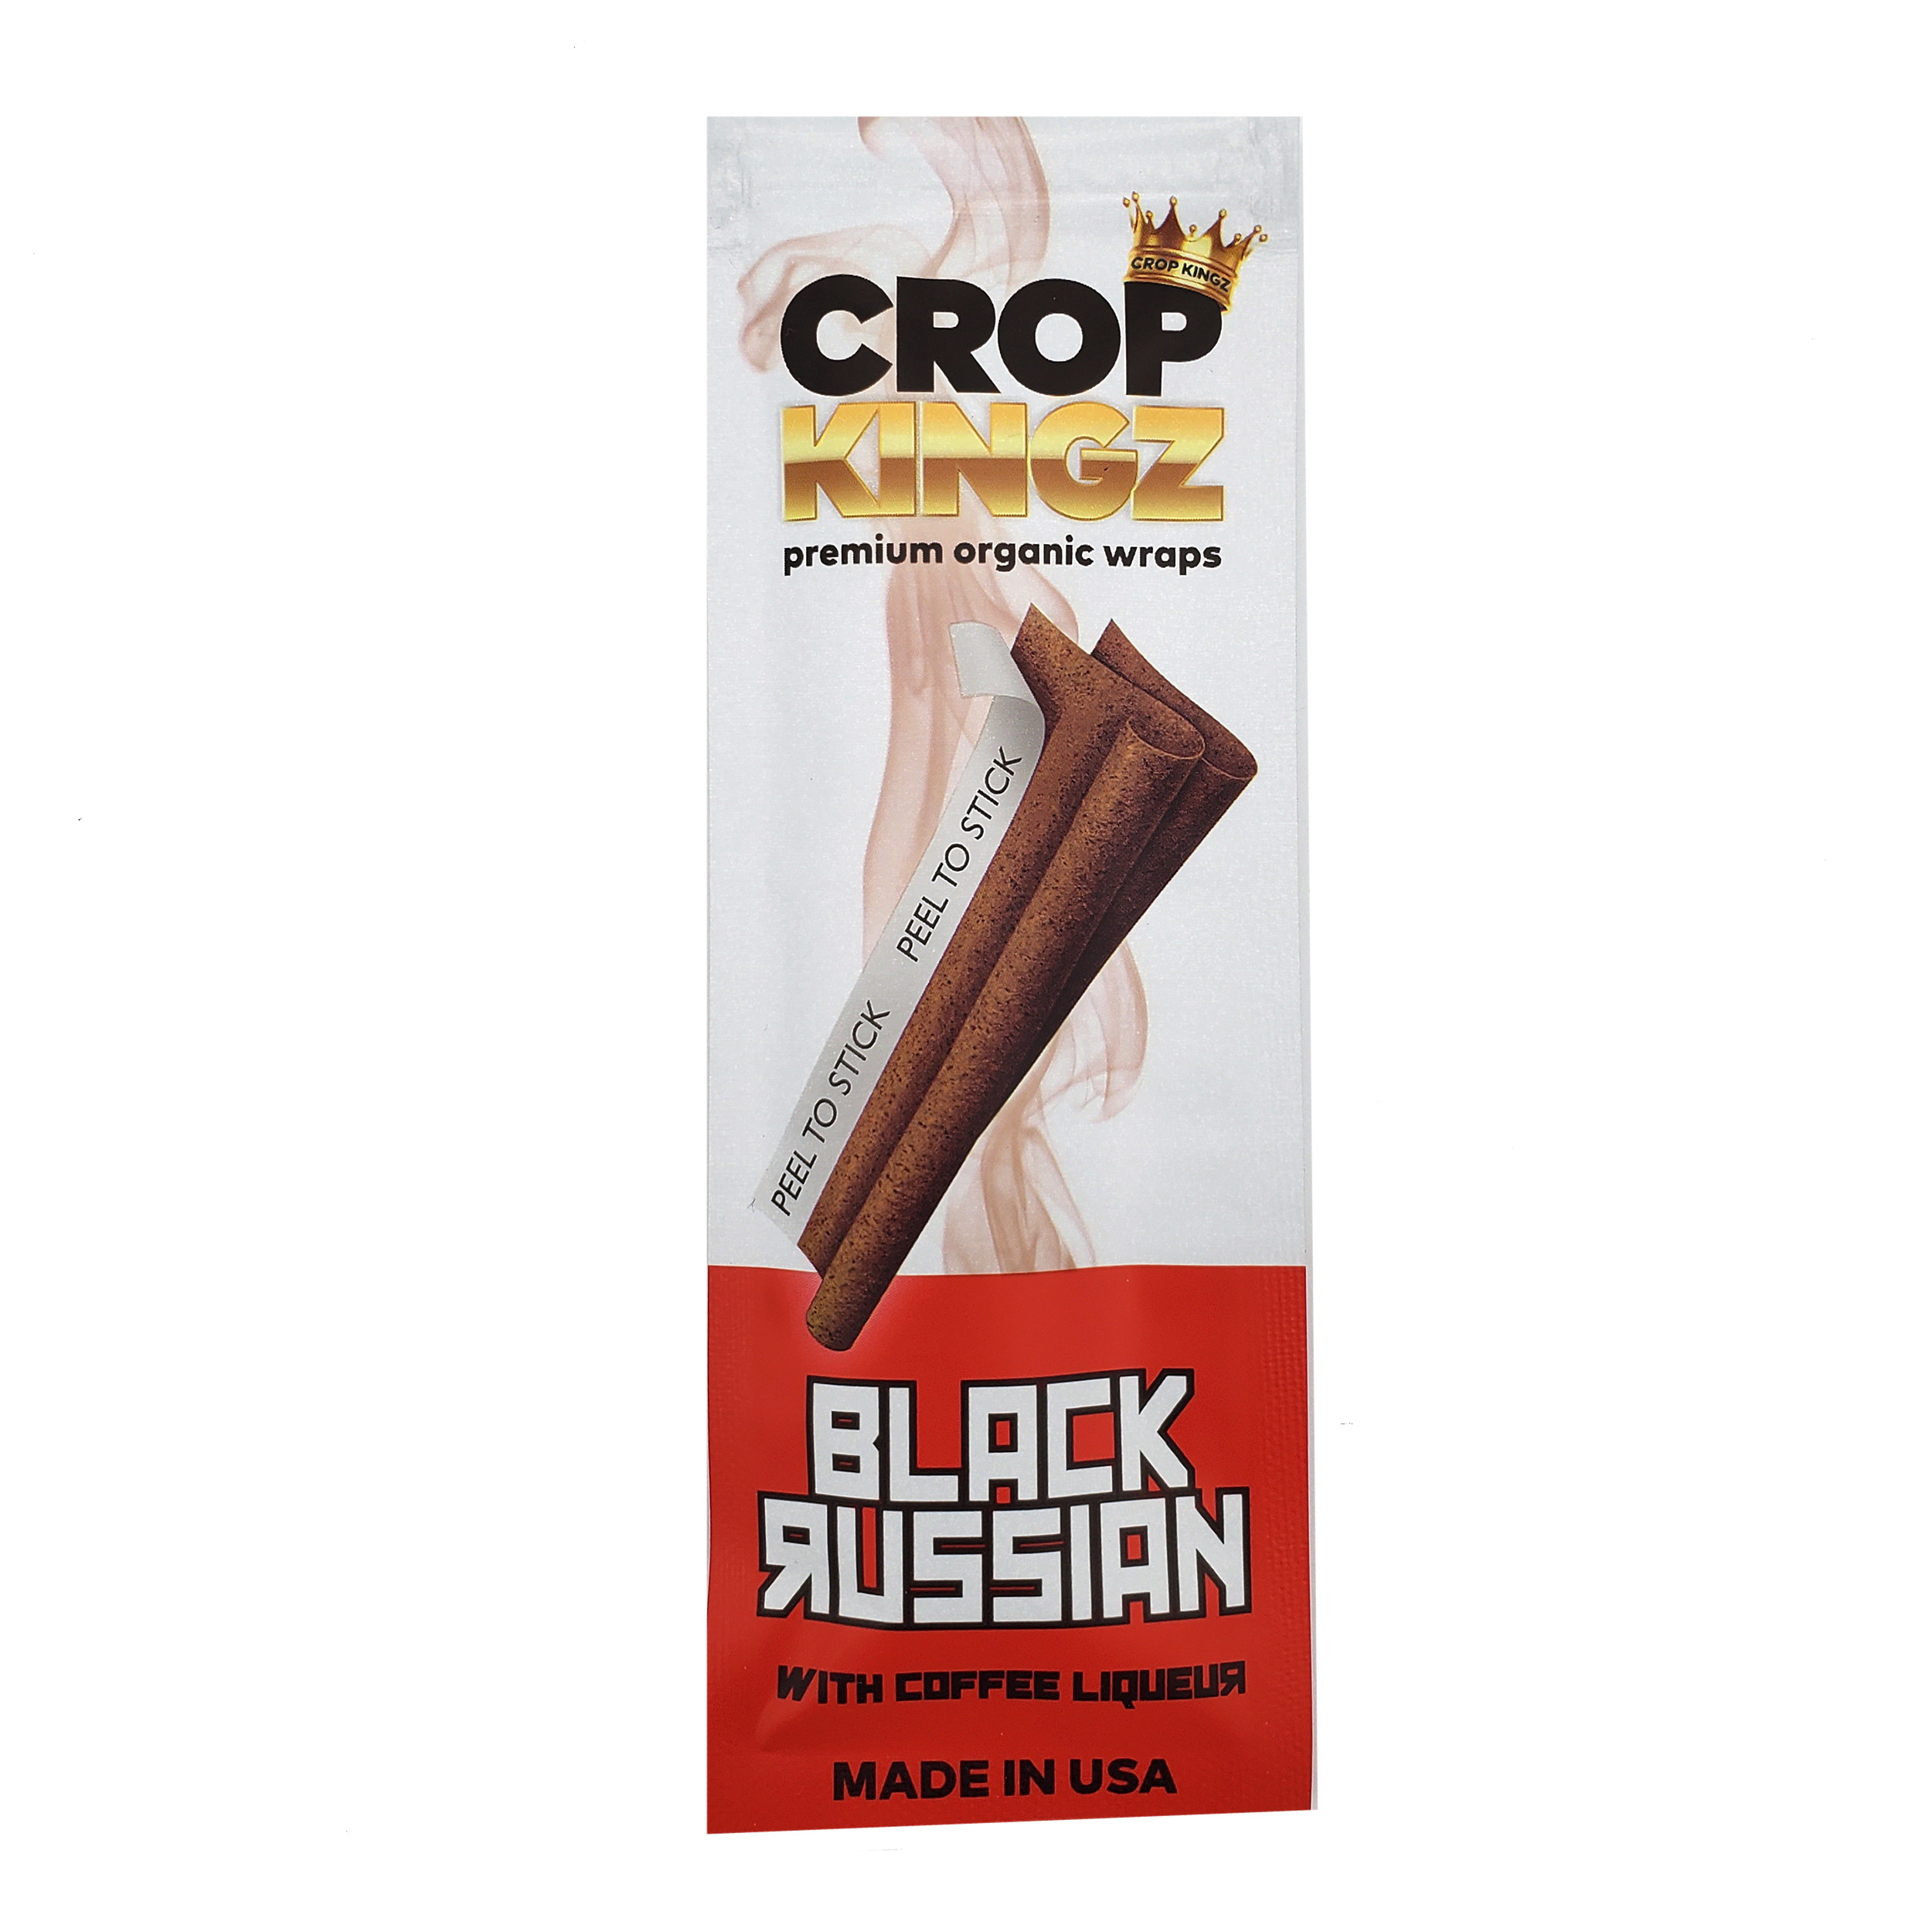 Crop Kingz Tobacco Inspired Organic Hemp Wraps - Black Russian